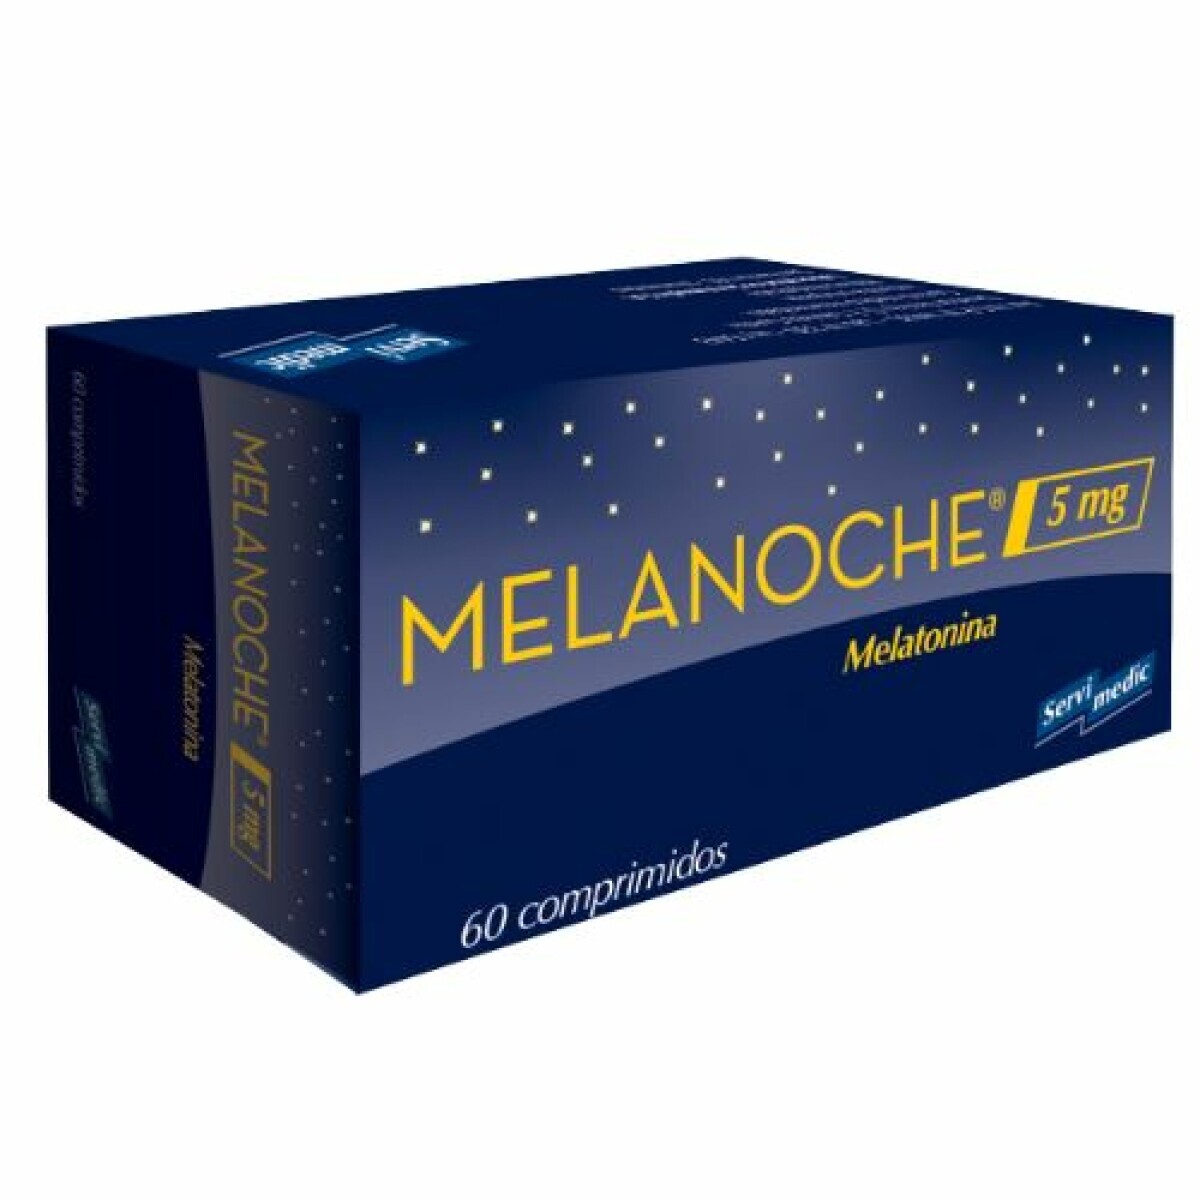 Melanoche 5 mg - 60 Comprimidos 